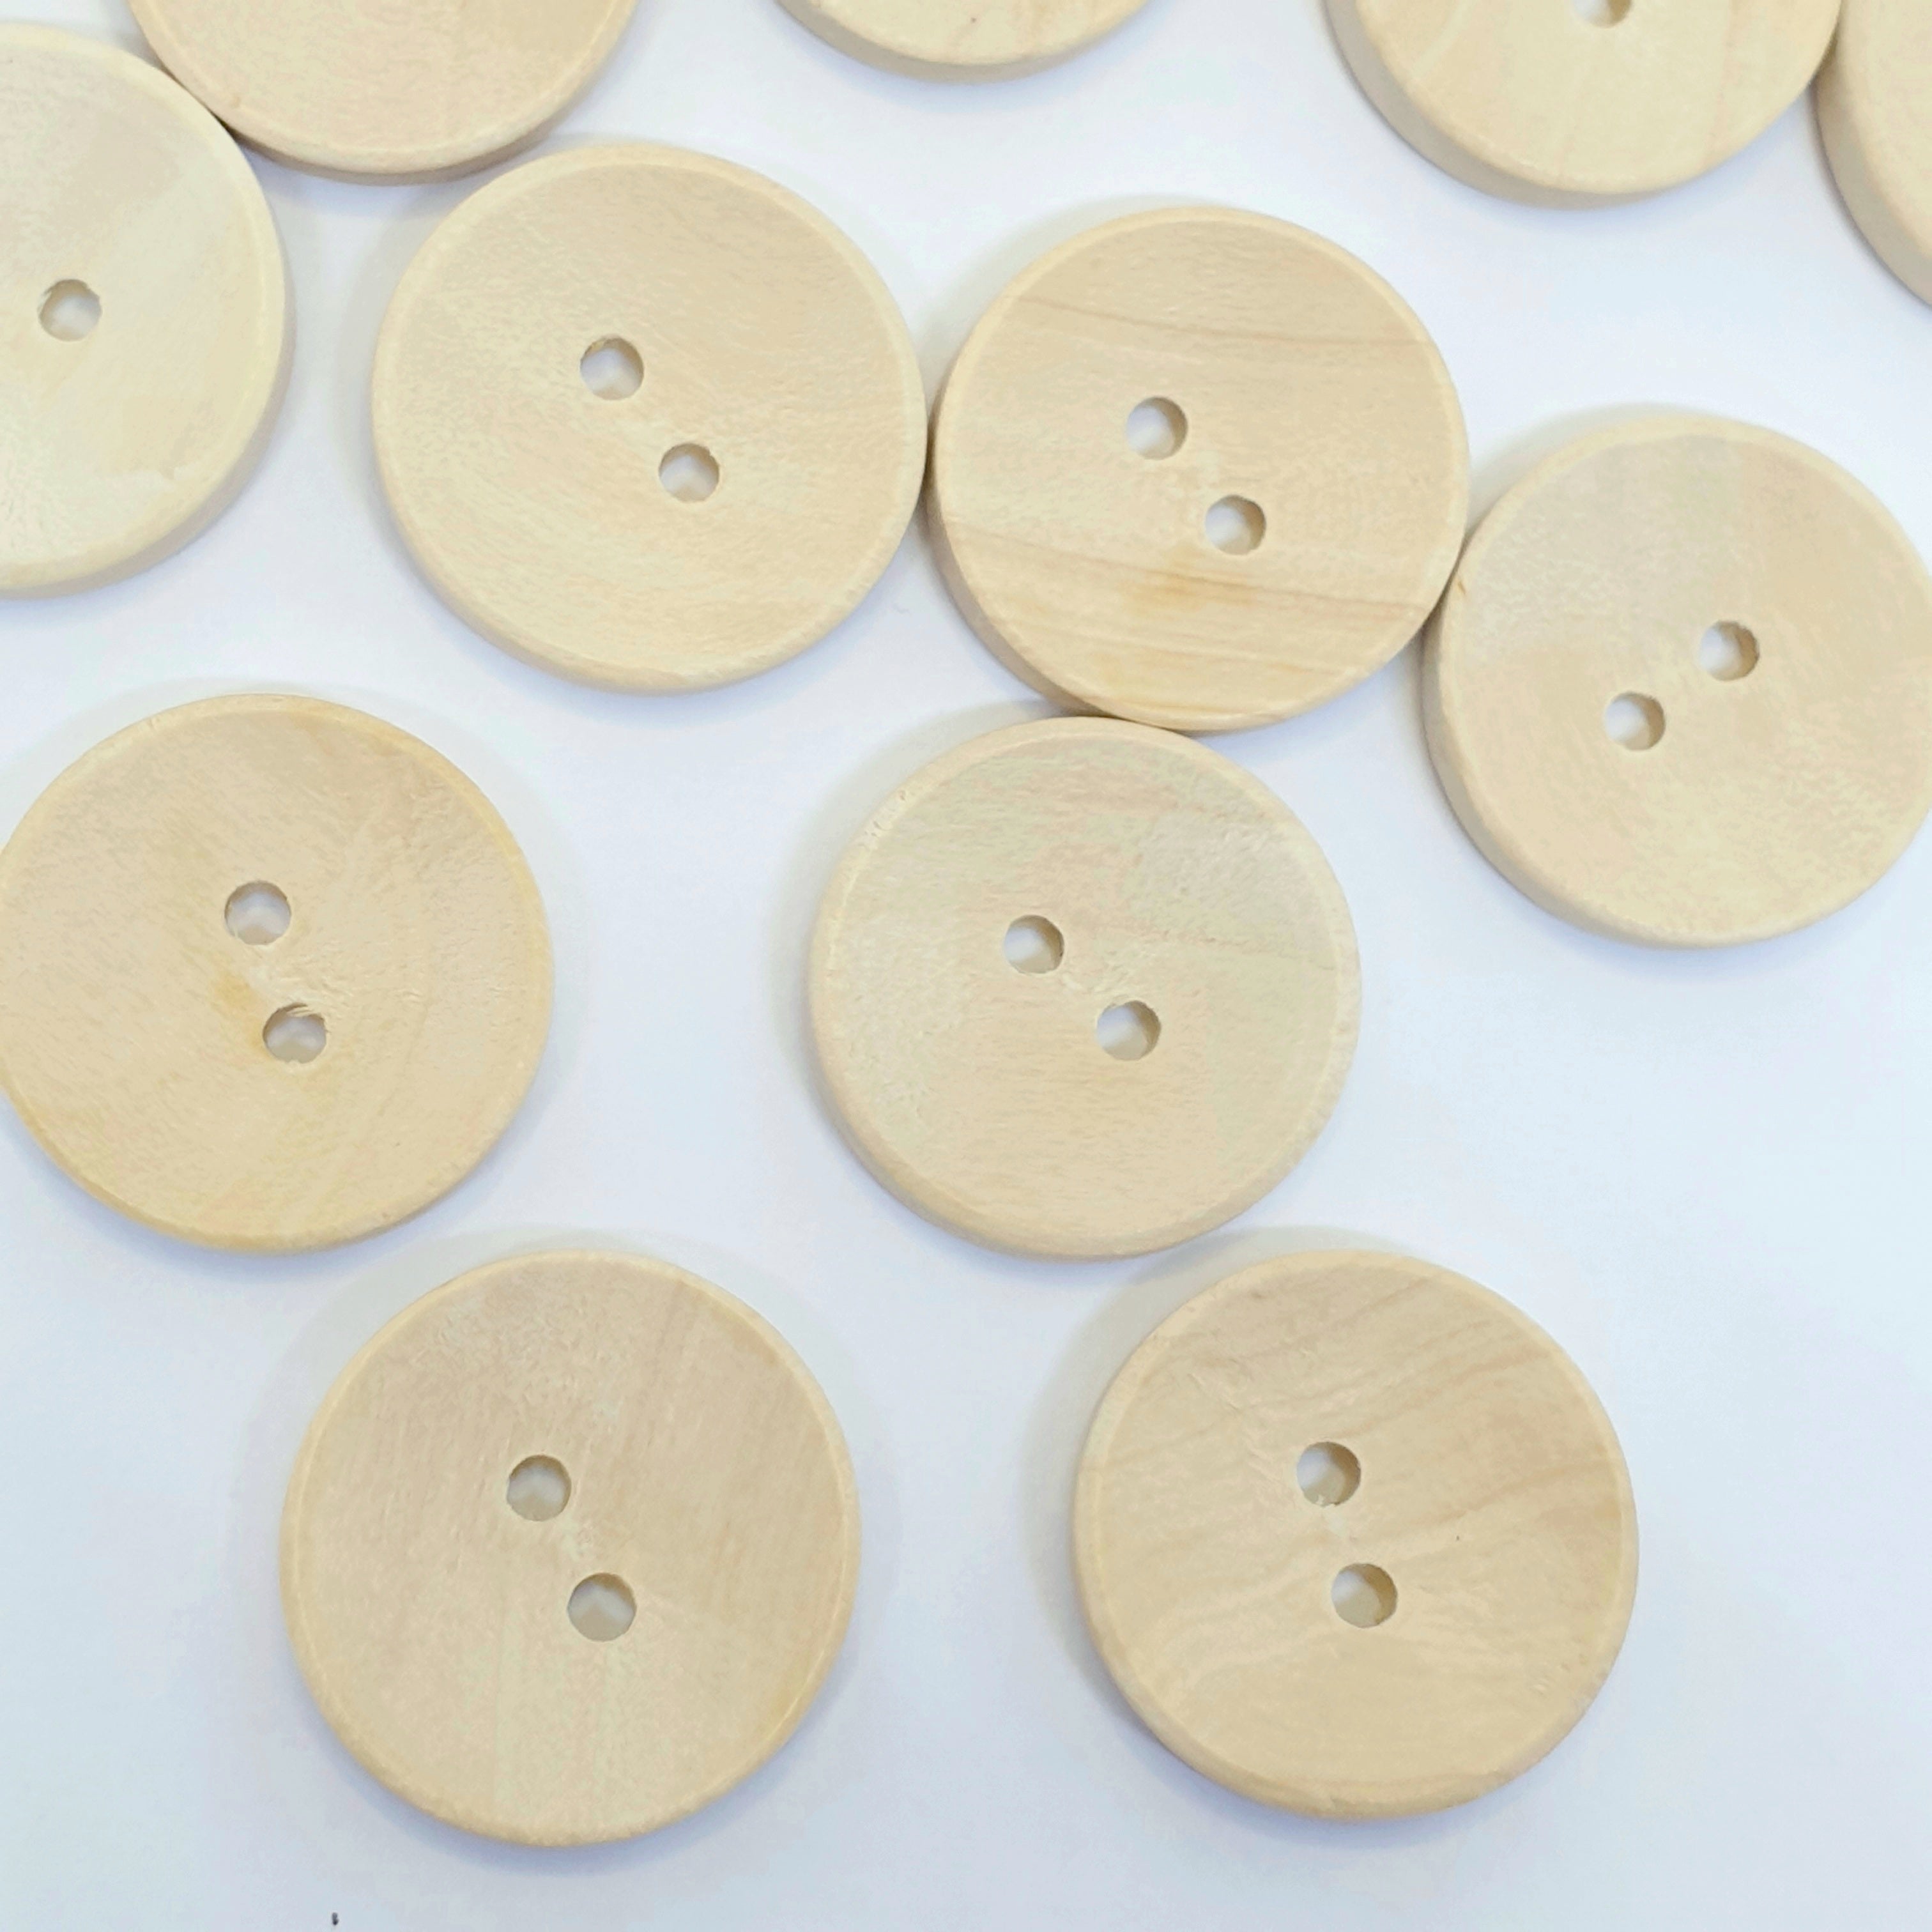 MajorCrafts 34pcs 20mm Light Brown Plain 2 Holes Round Wooden Sewing Buttons